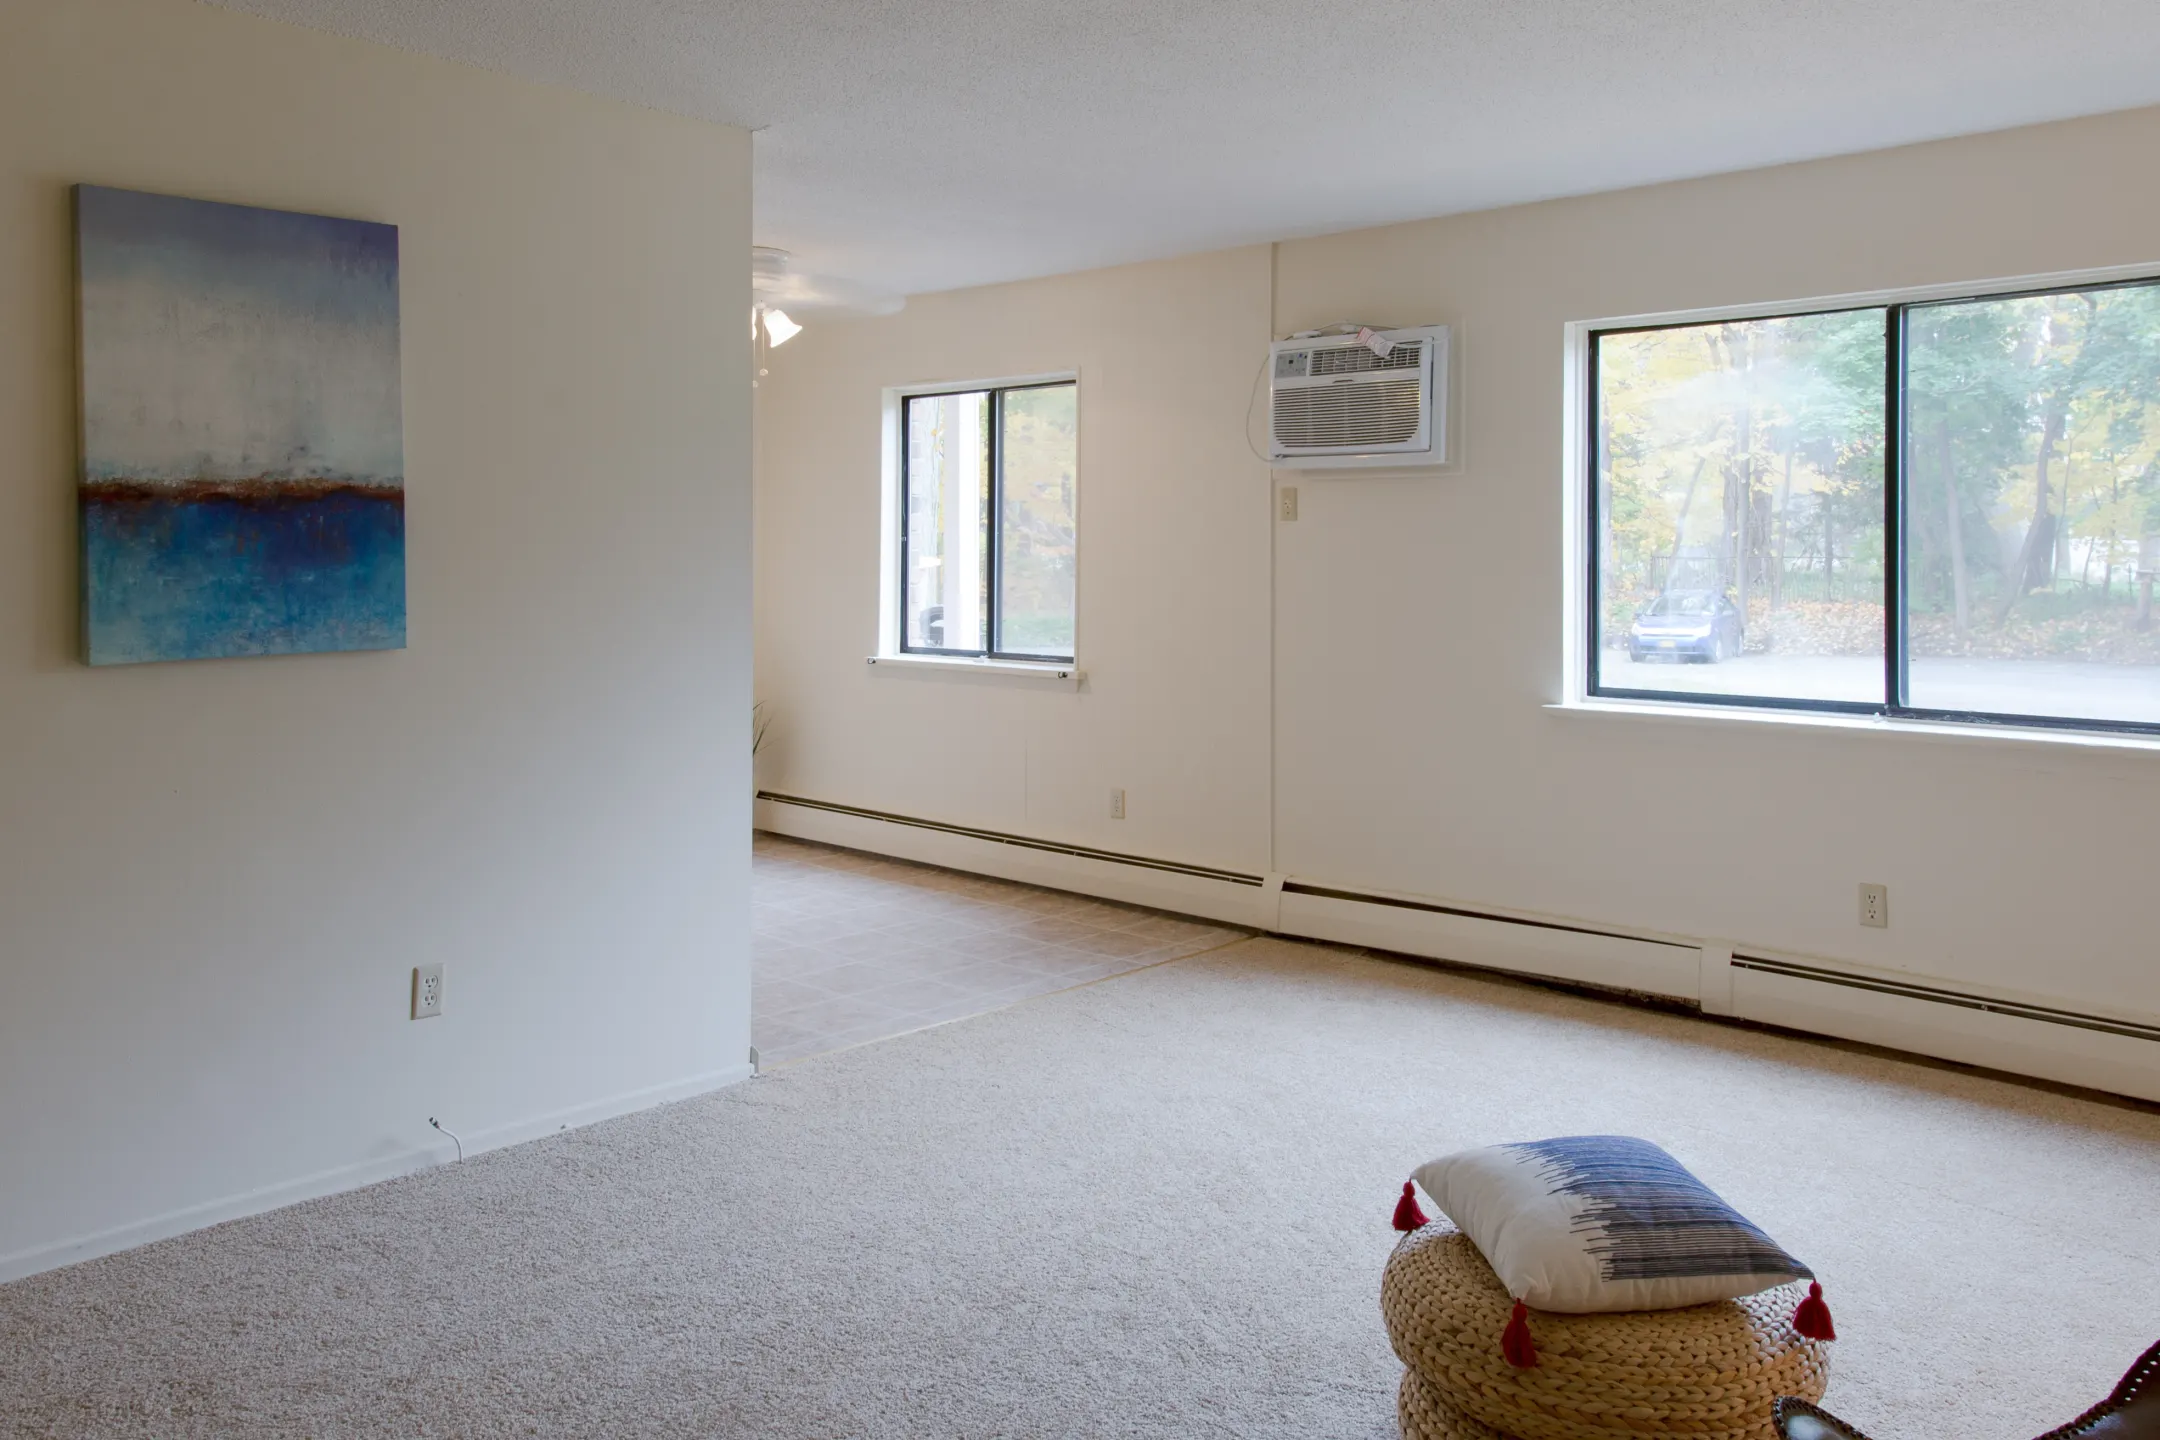 Living Room - Royal Apartments - Le Roy, NY